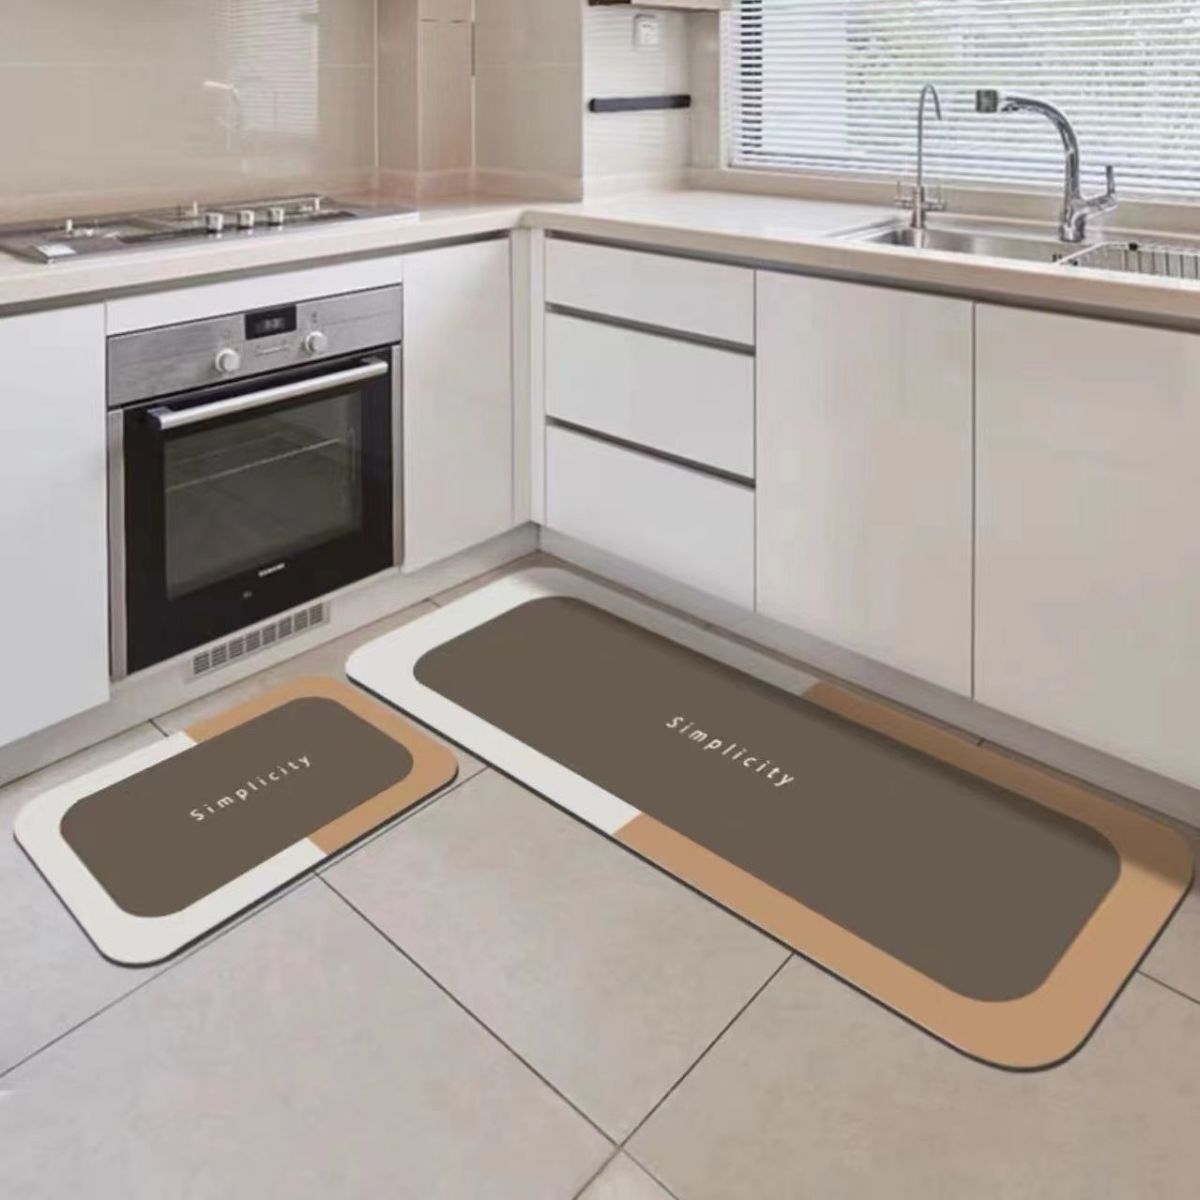 New Kitchen Floor Mat Absorbent Oil-Absorbing Non-Slip Wear-Resistant Stain-Resistant Folding Long Carpet Set